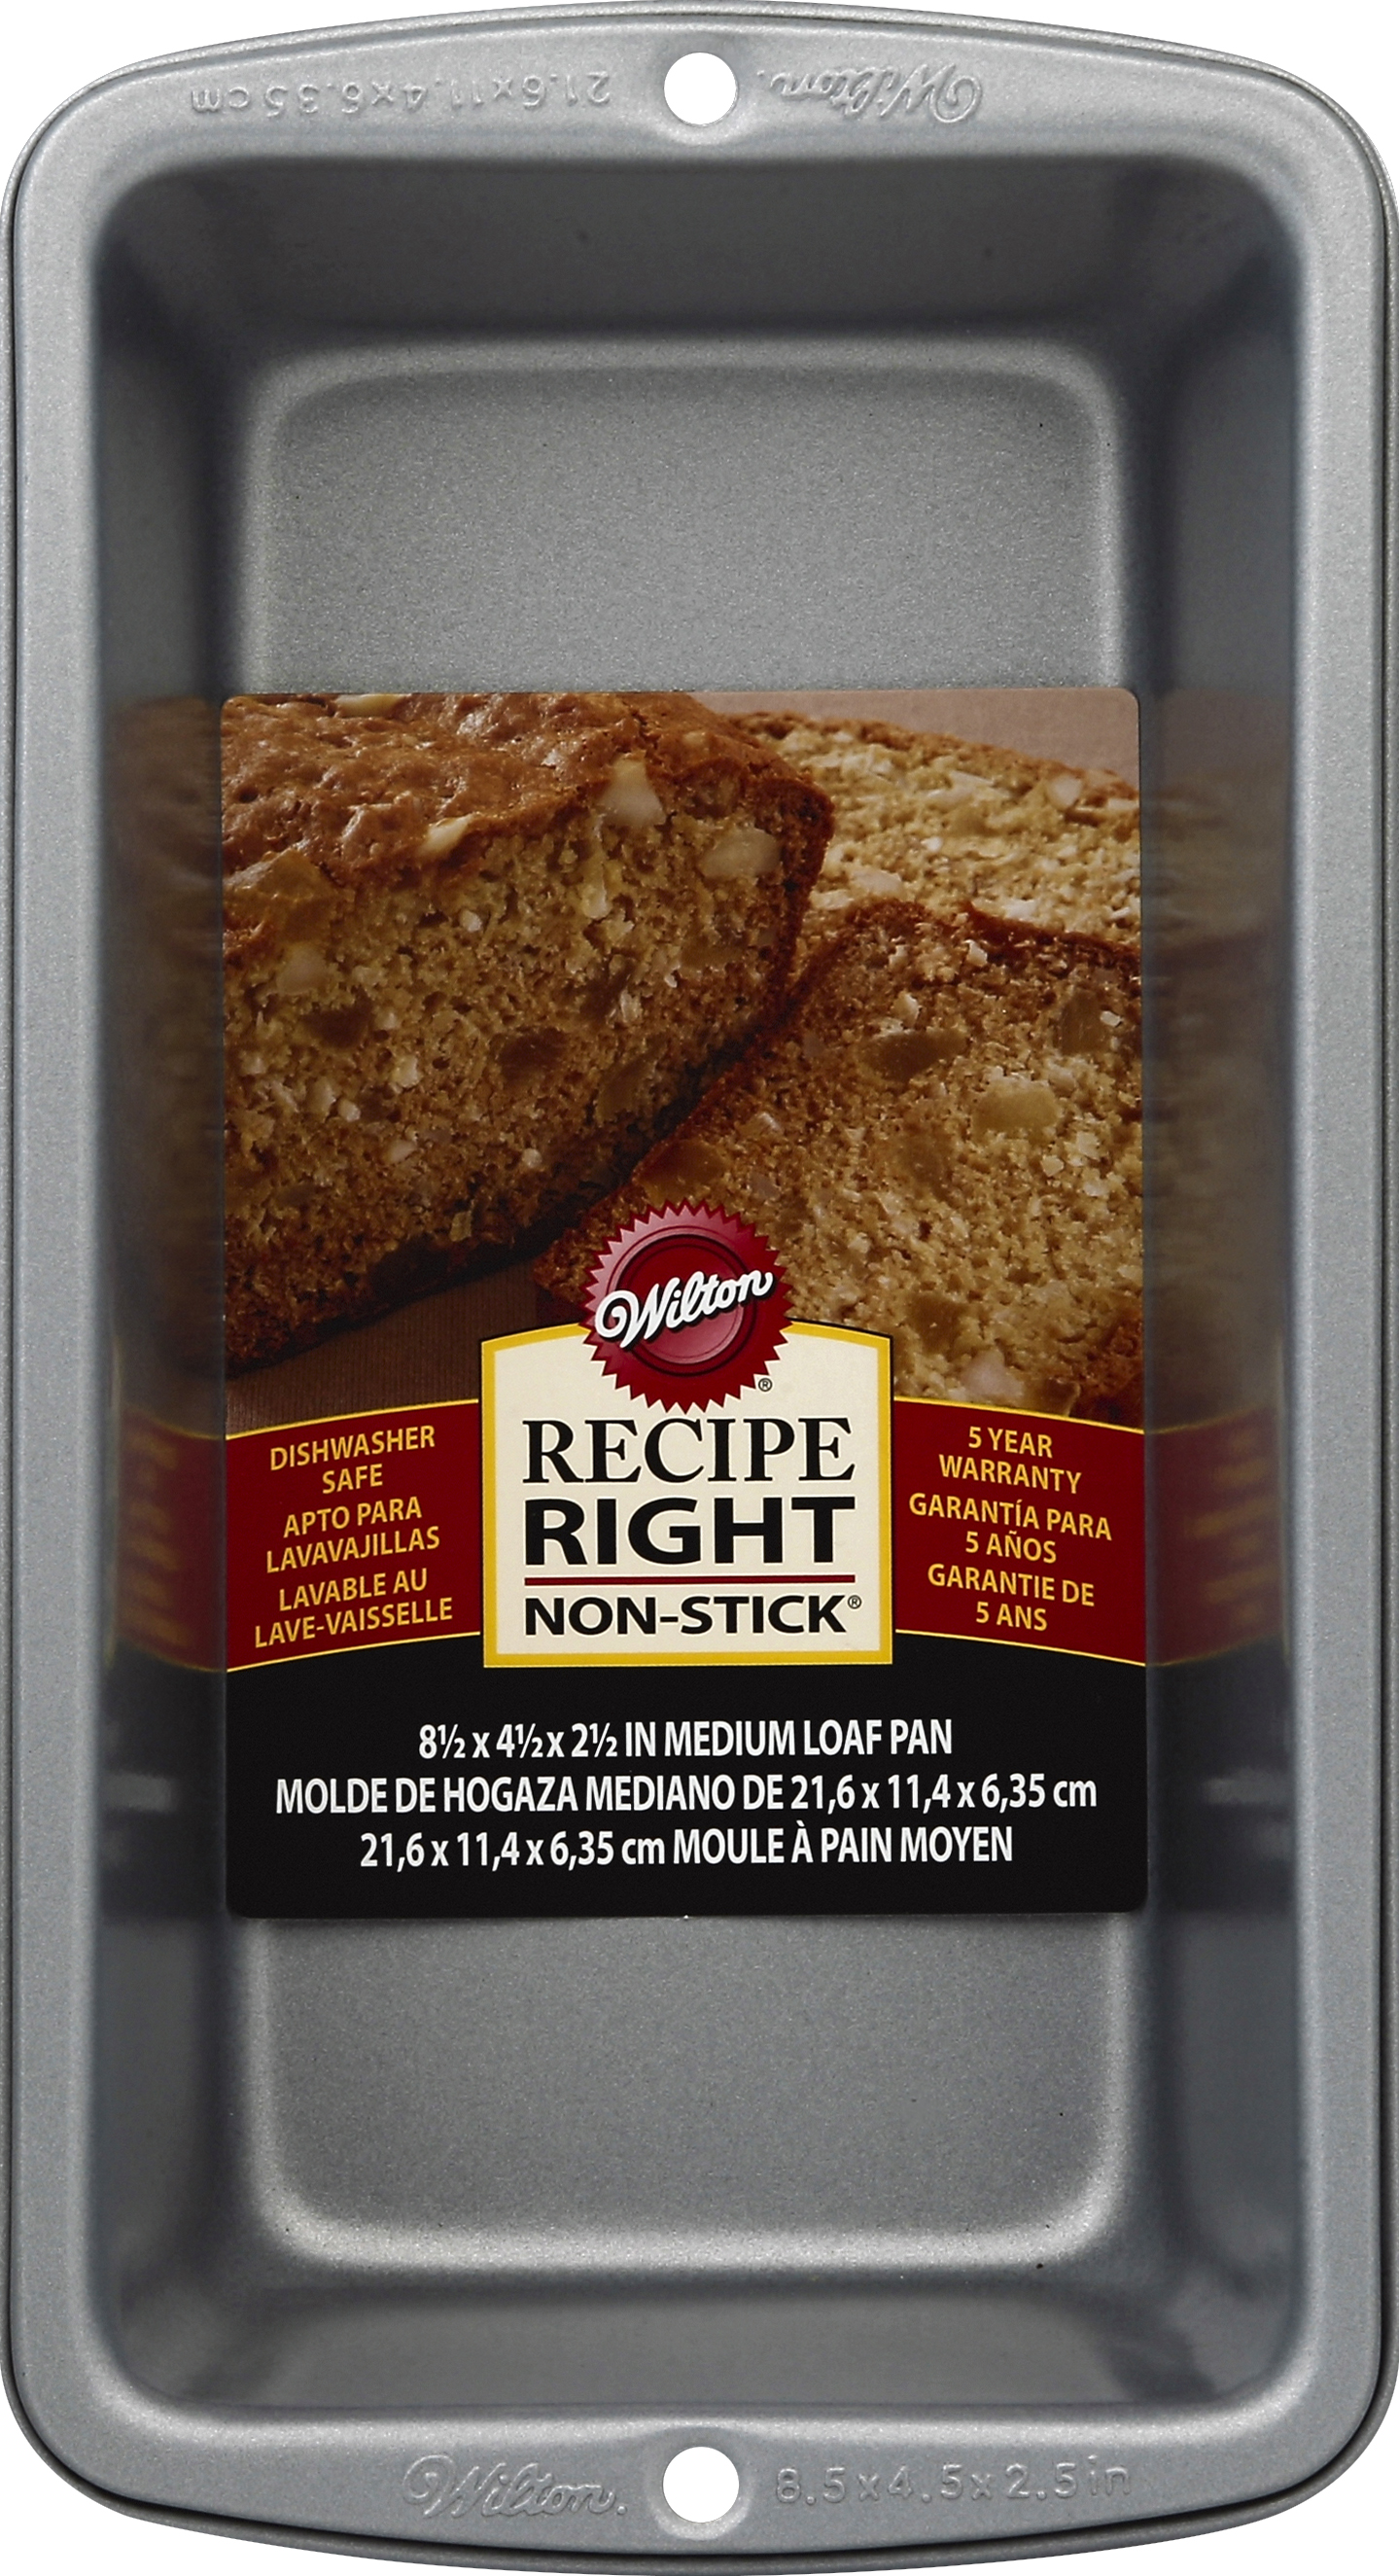 Wilton 191003159 Recipe Right Non-Stick Medium Loaf Pan, Silver - image 4 of 4